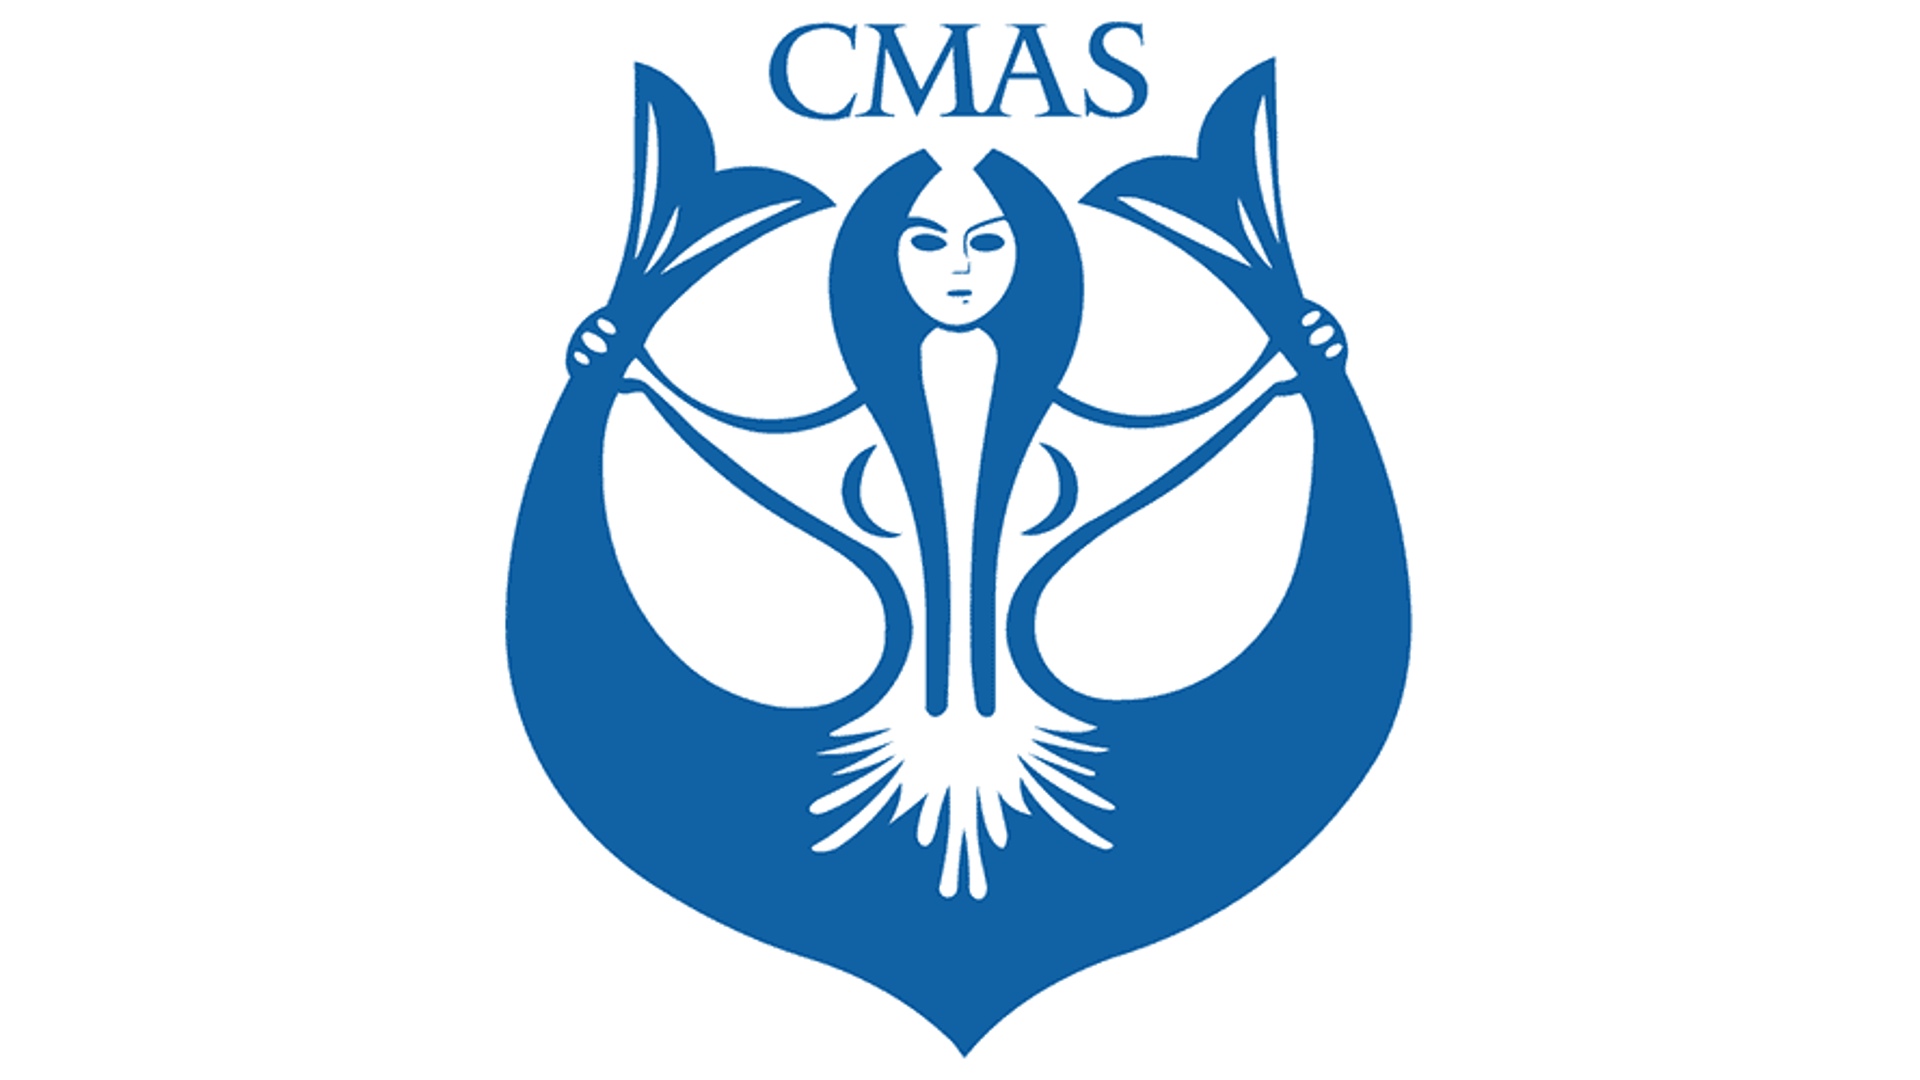 CMAS Logo